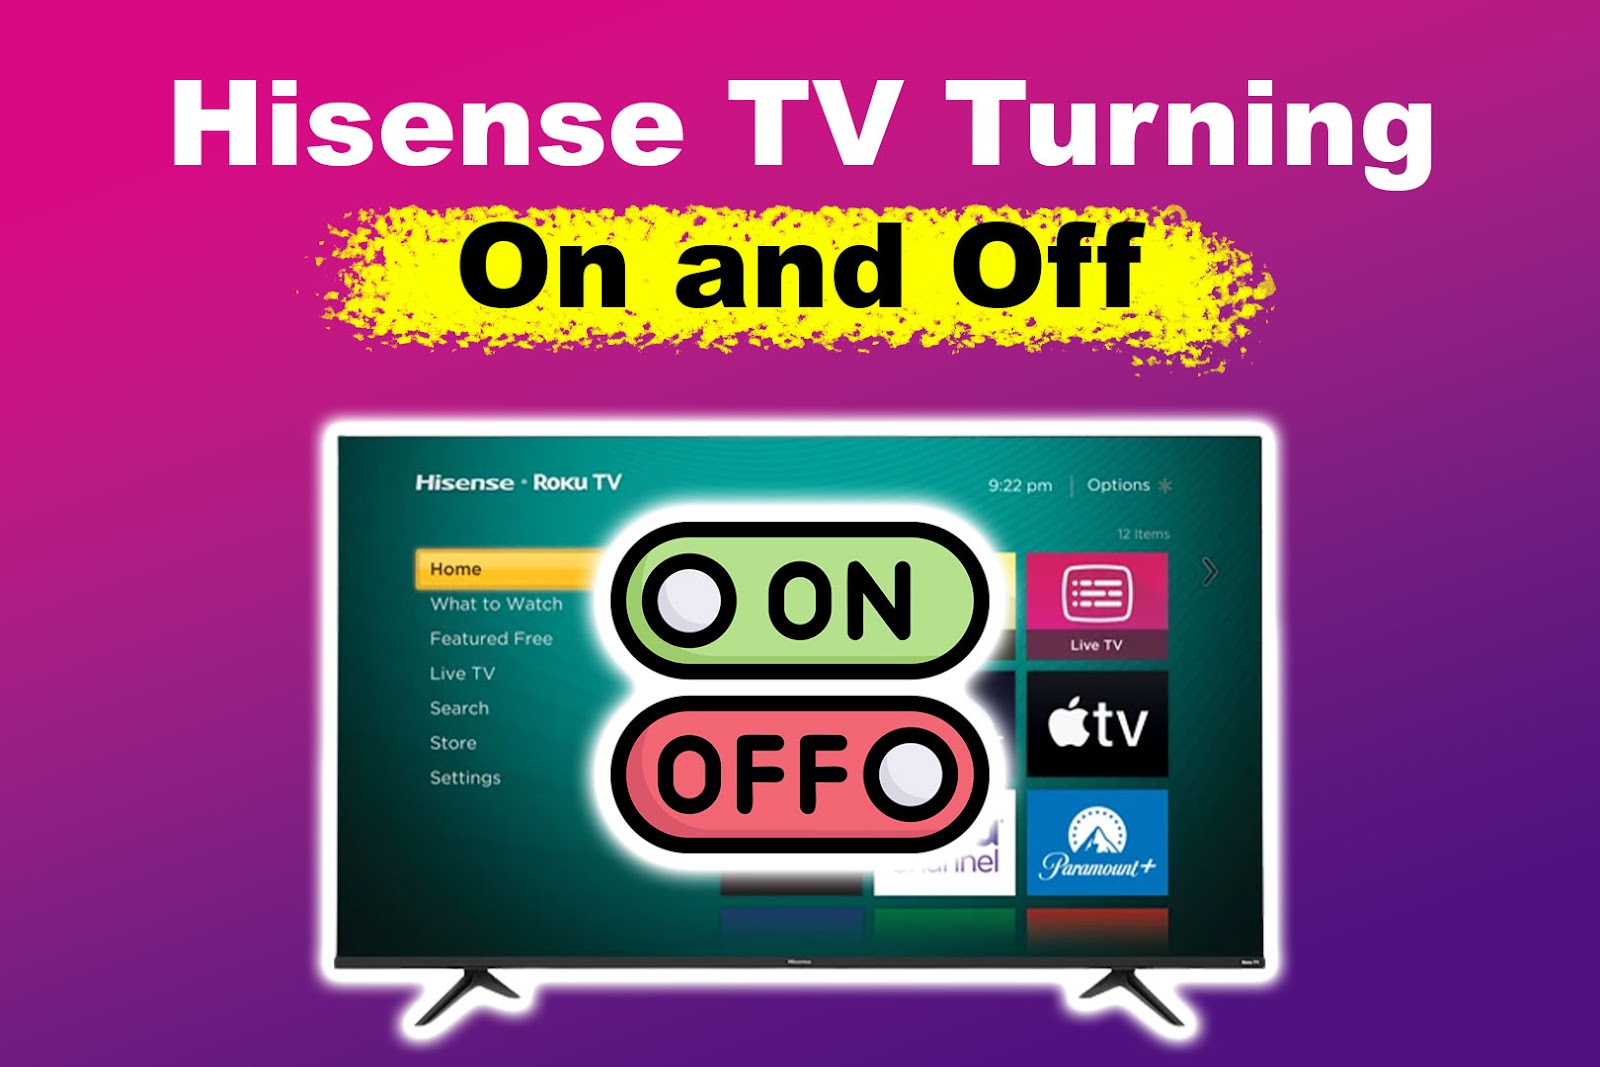 Hisense TV Turning On and Off